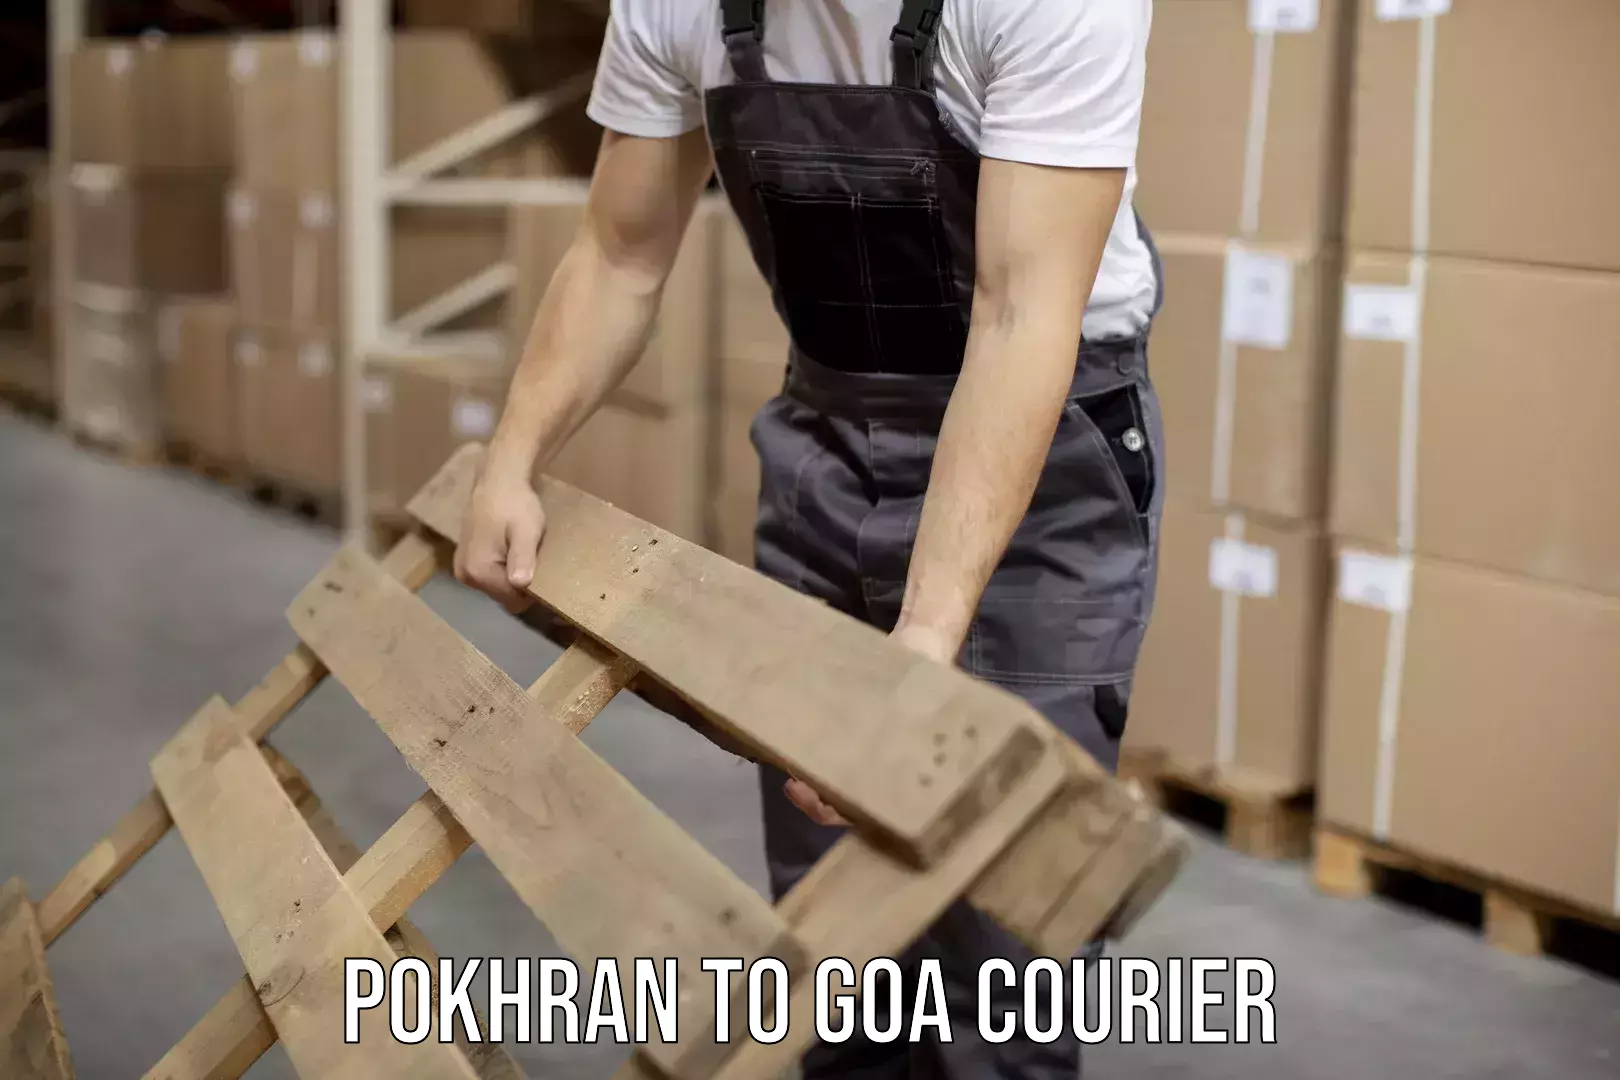 Courier service comparison Pokhran to Panjim